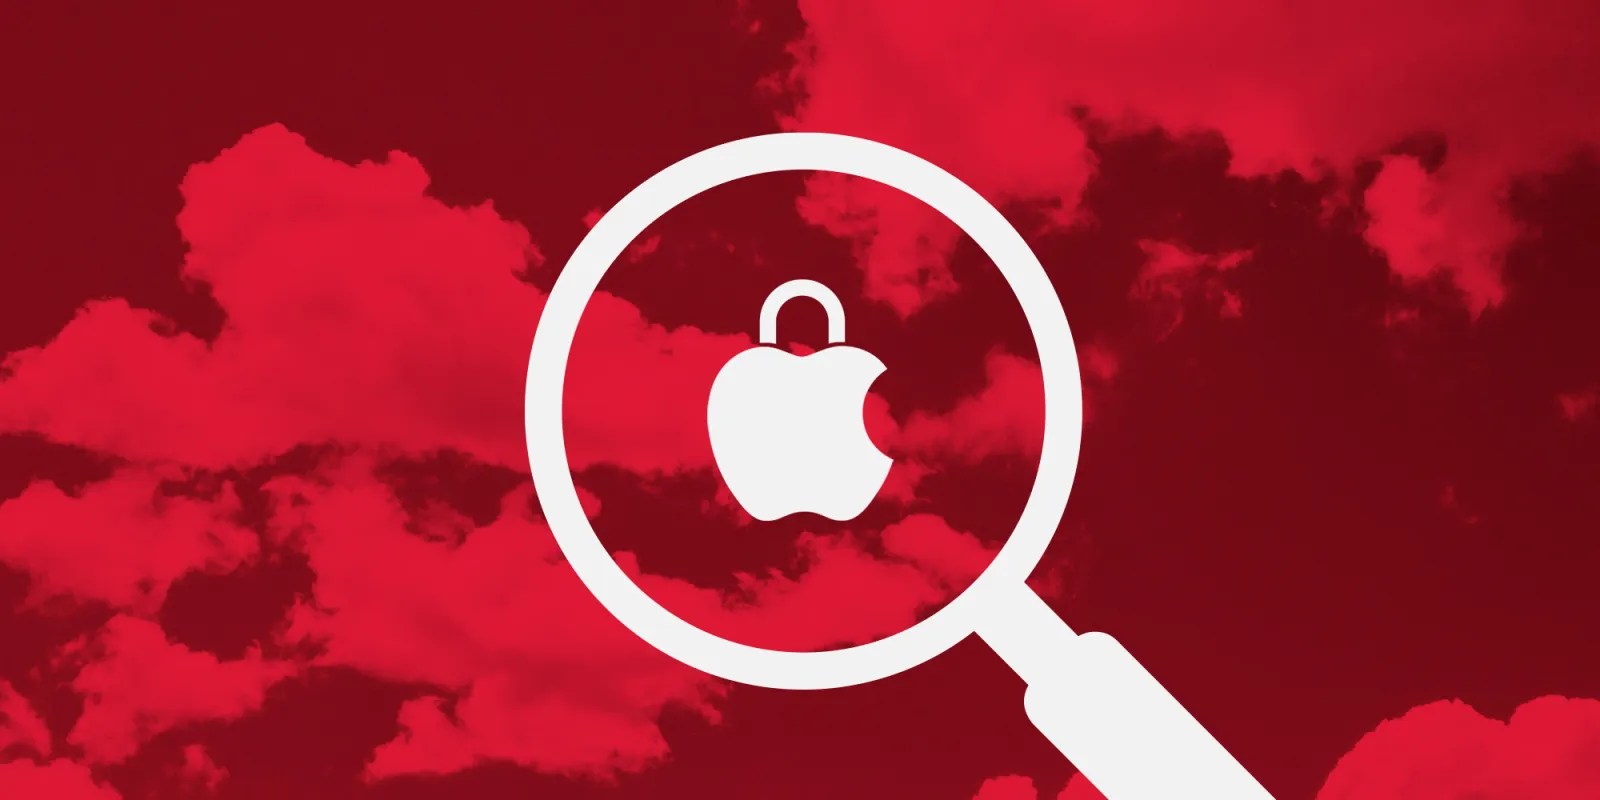 apple zero-day exploit spyware security iOS macOS patches fixes